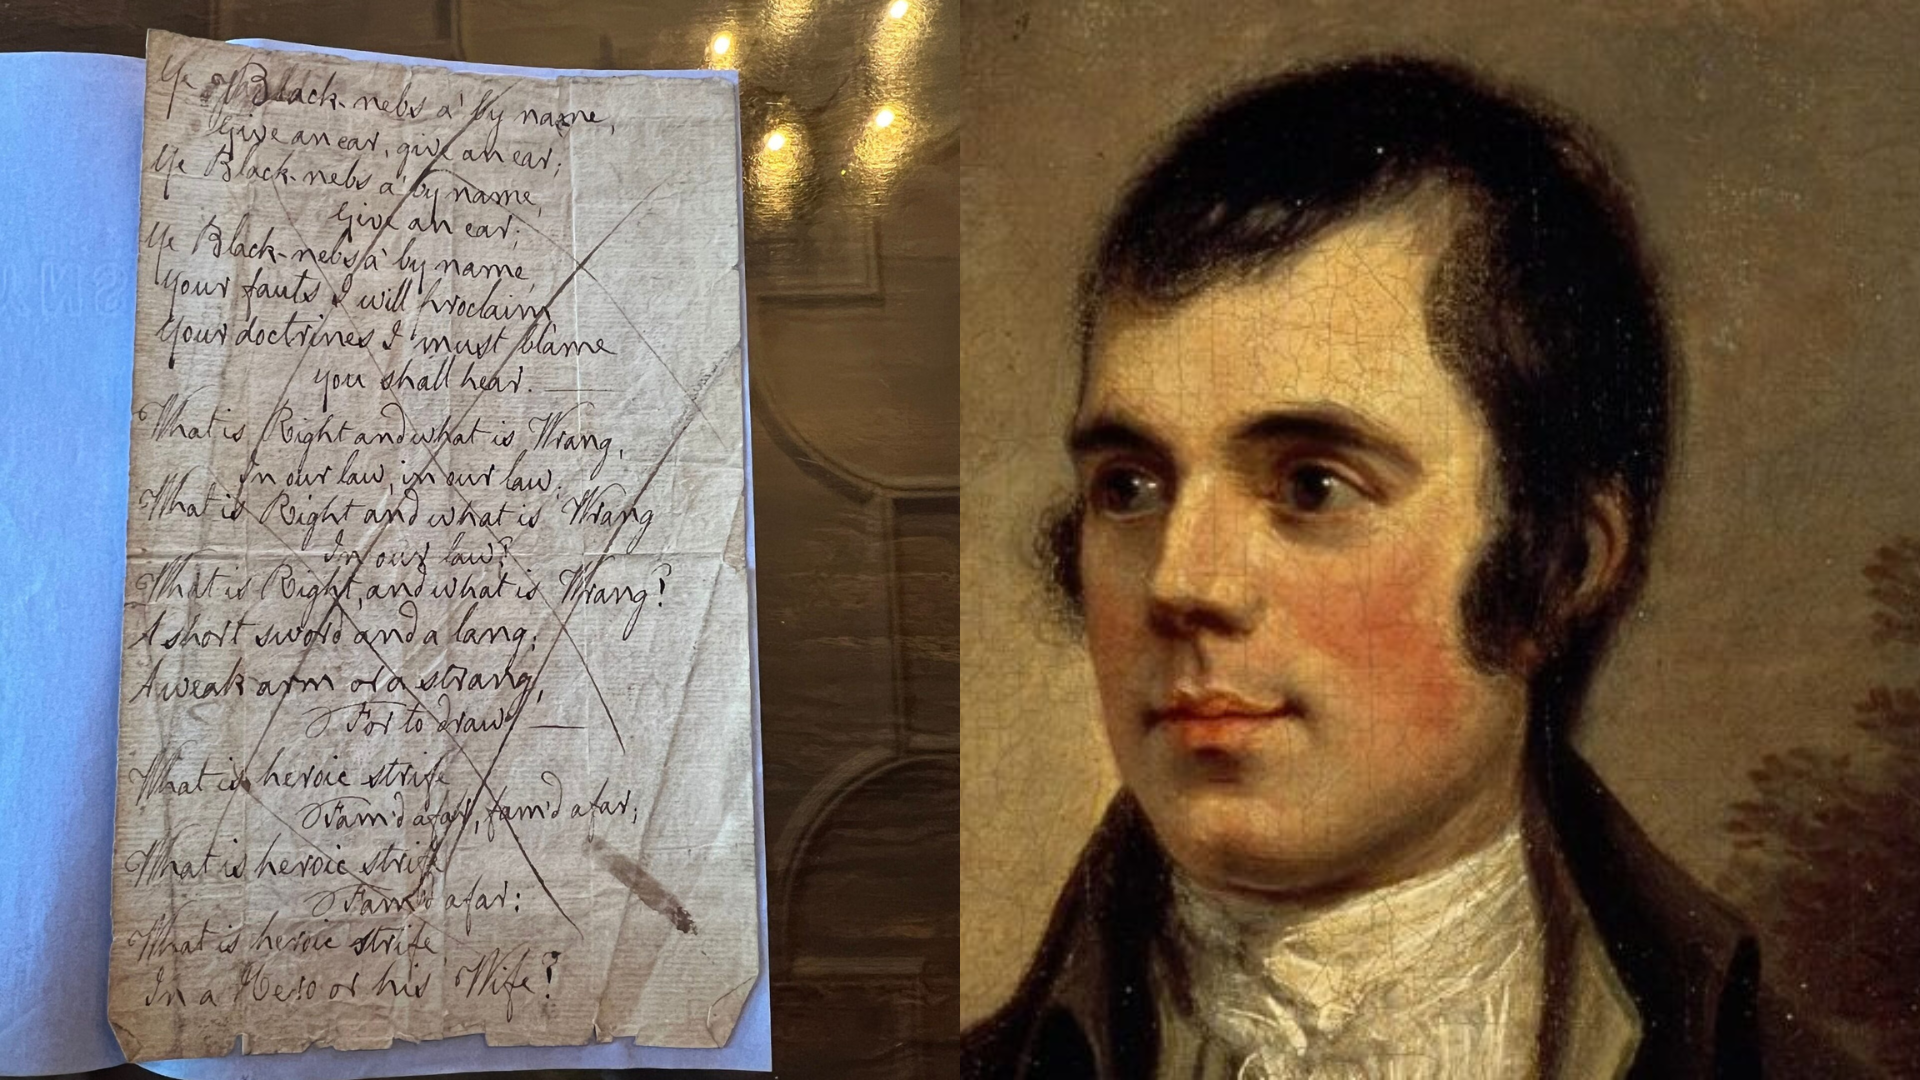 University of Glasgow scholar discovers hidden Burns manuscript